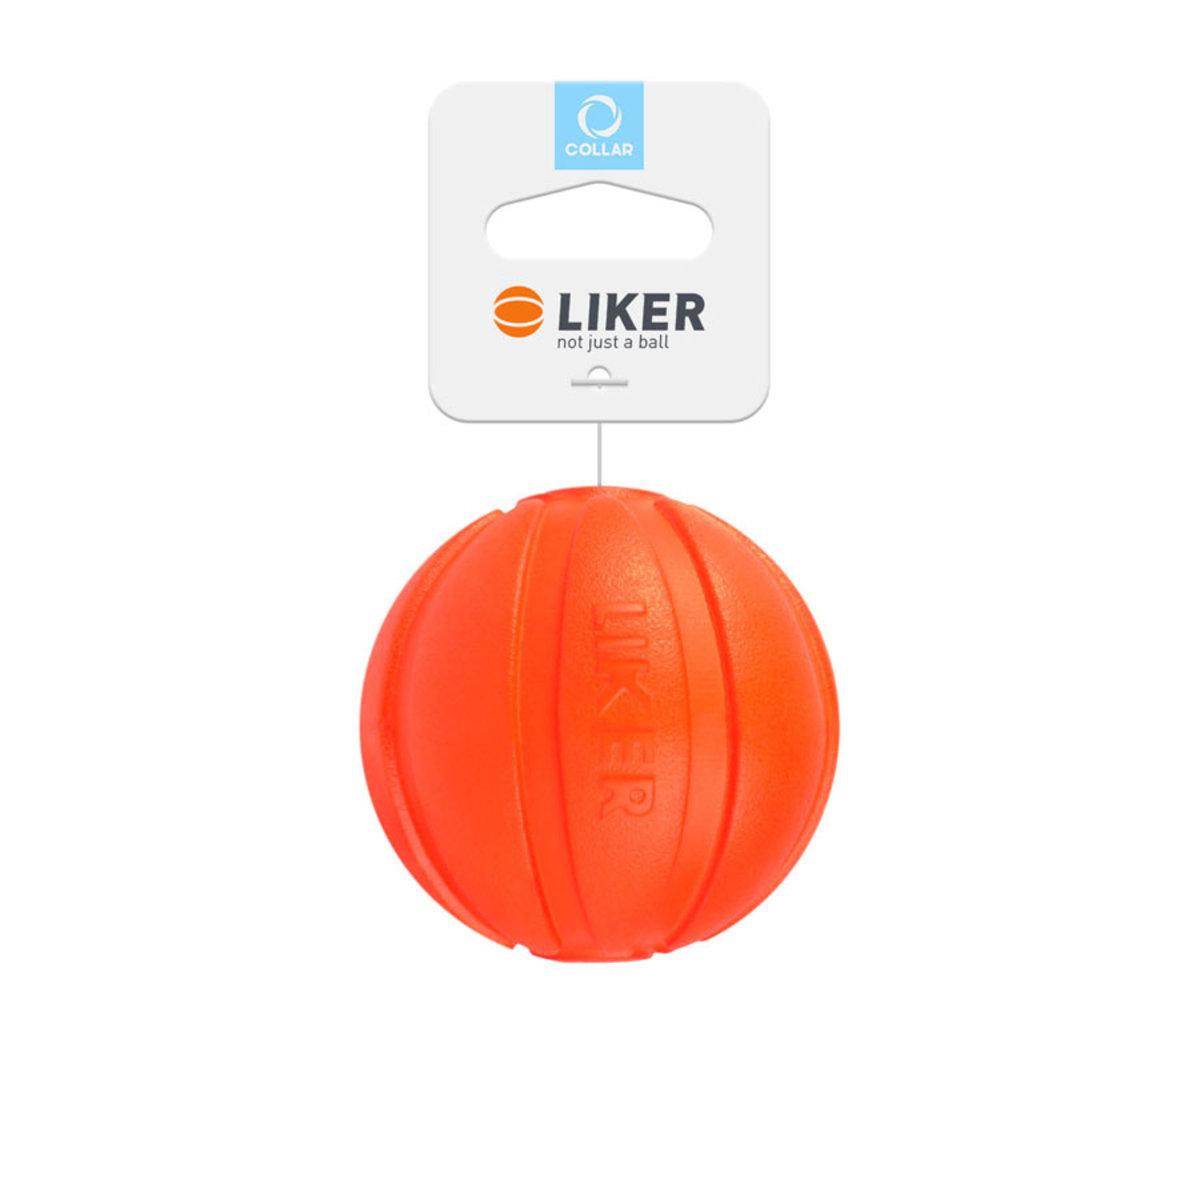 М'ячик Лайкер LIKER для собак, 7 см, фото 1